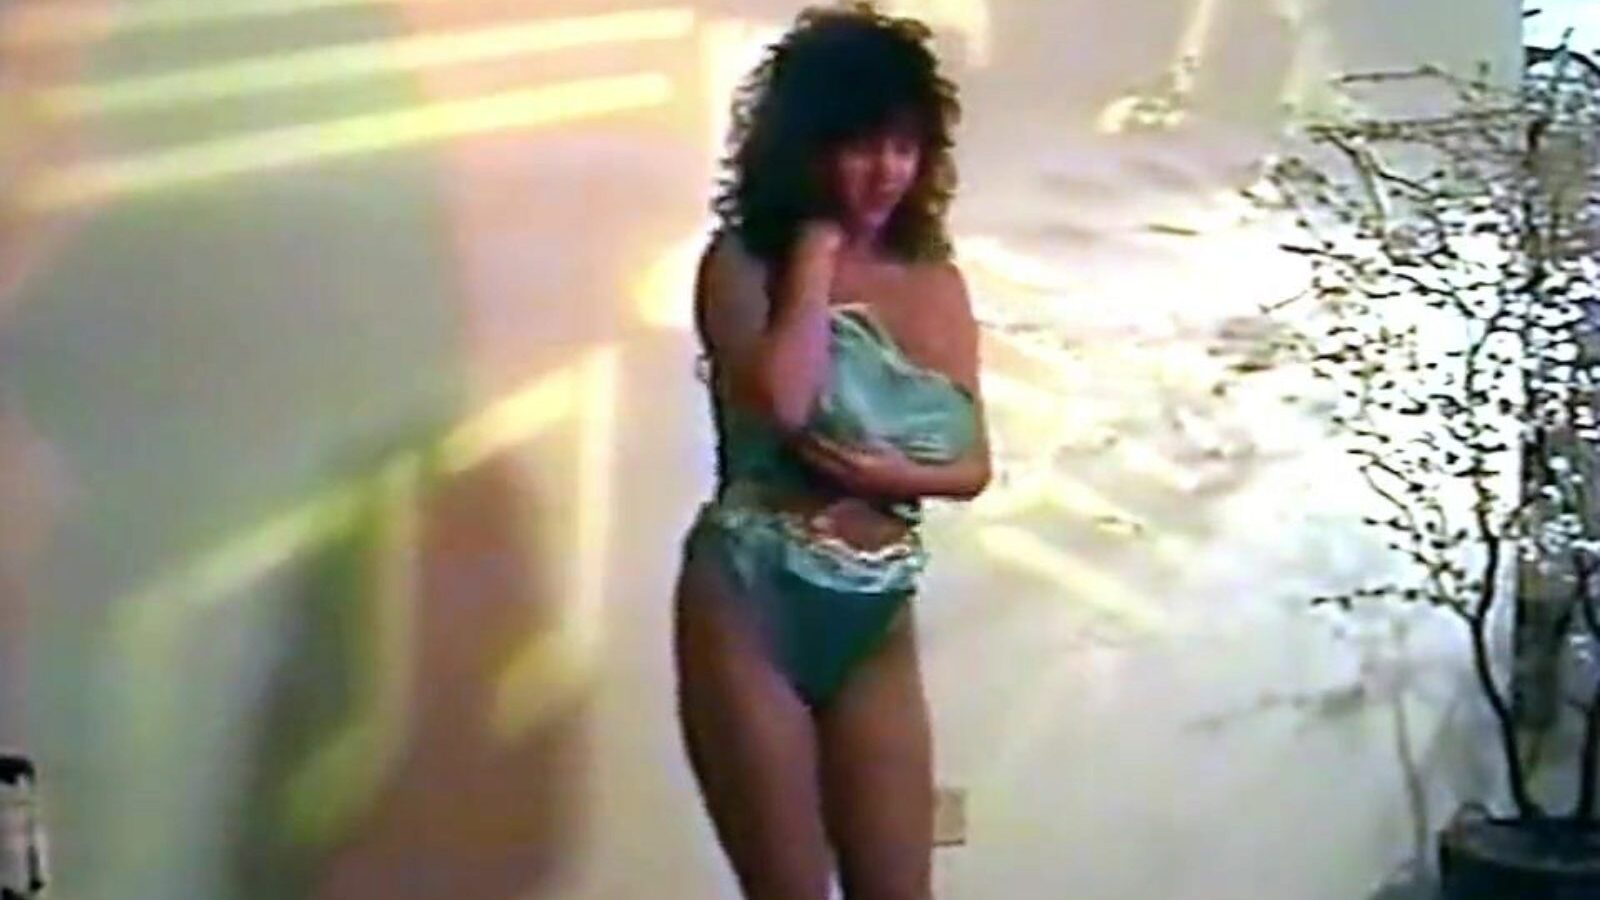 opsjednutost - vintage strip ples donjeg rublja iz 80-ih s velikim satom